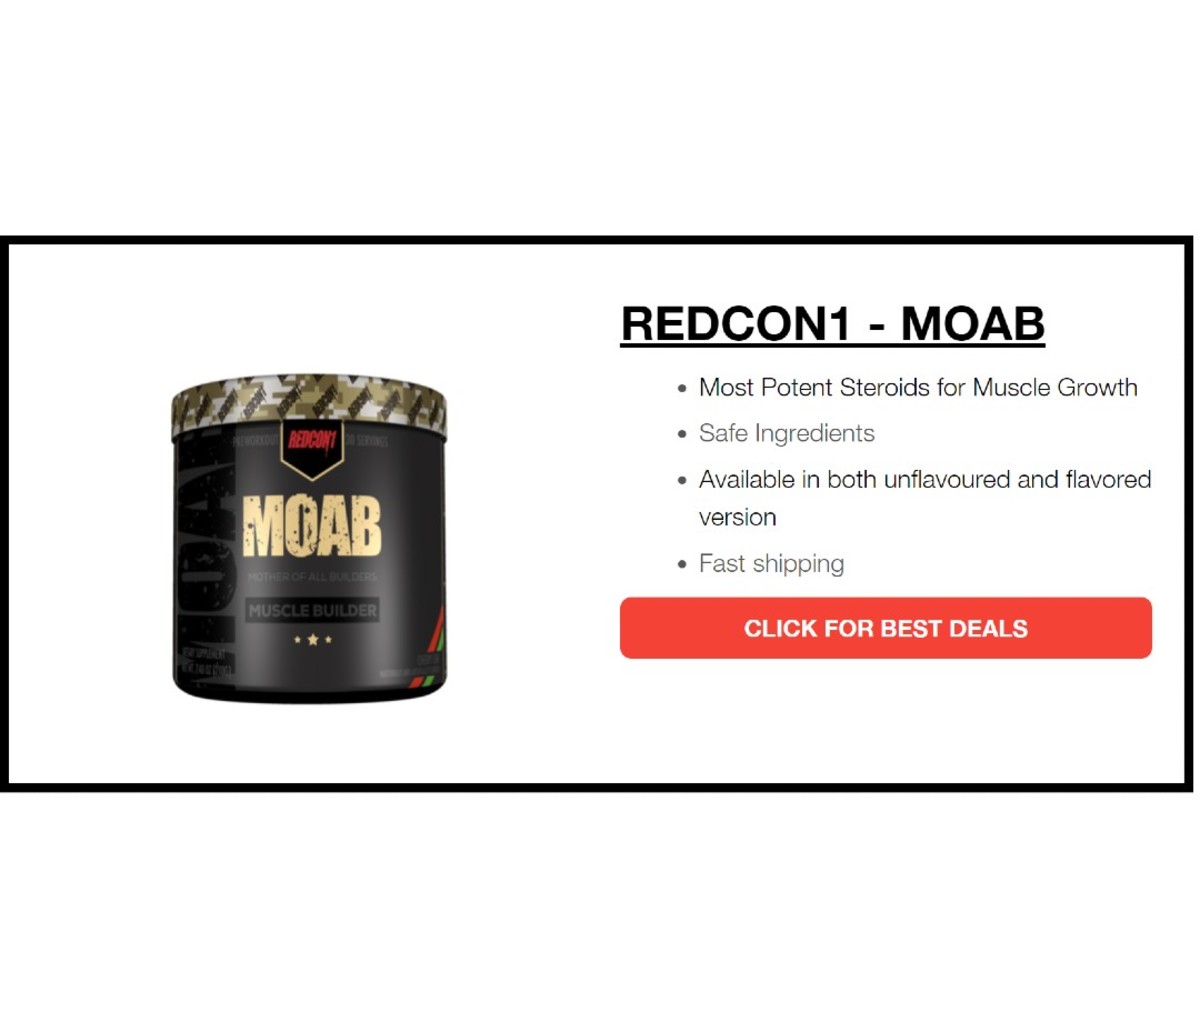 REDCON1 - MOAB